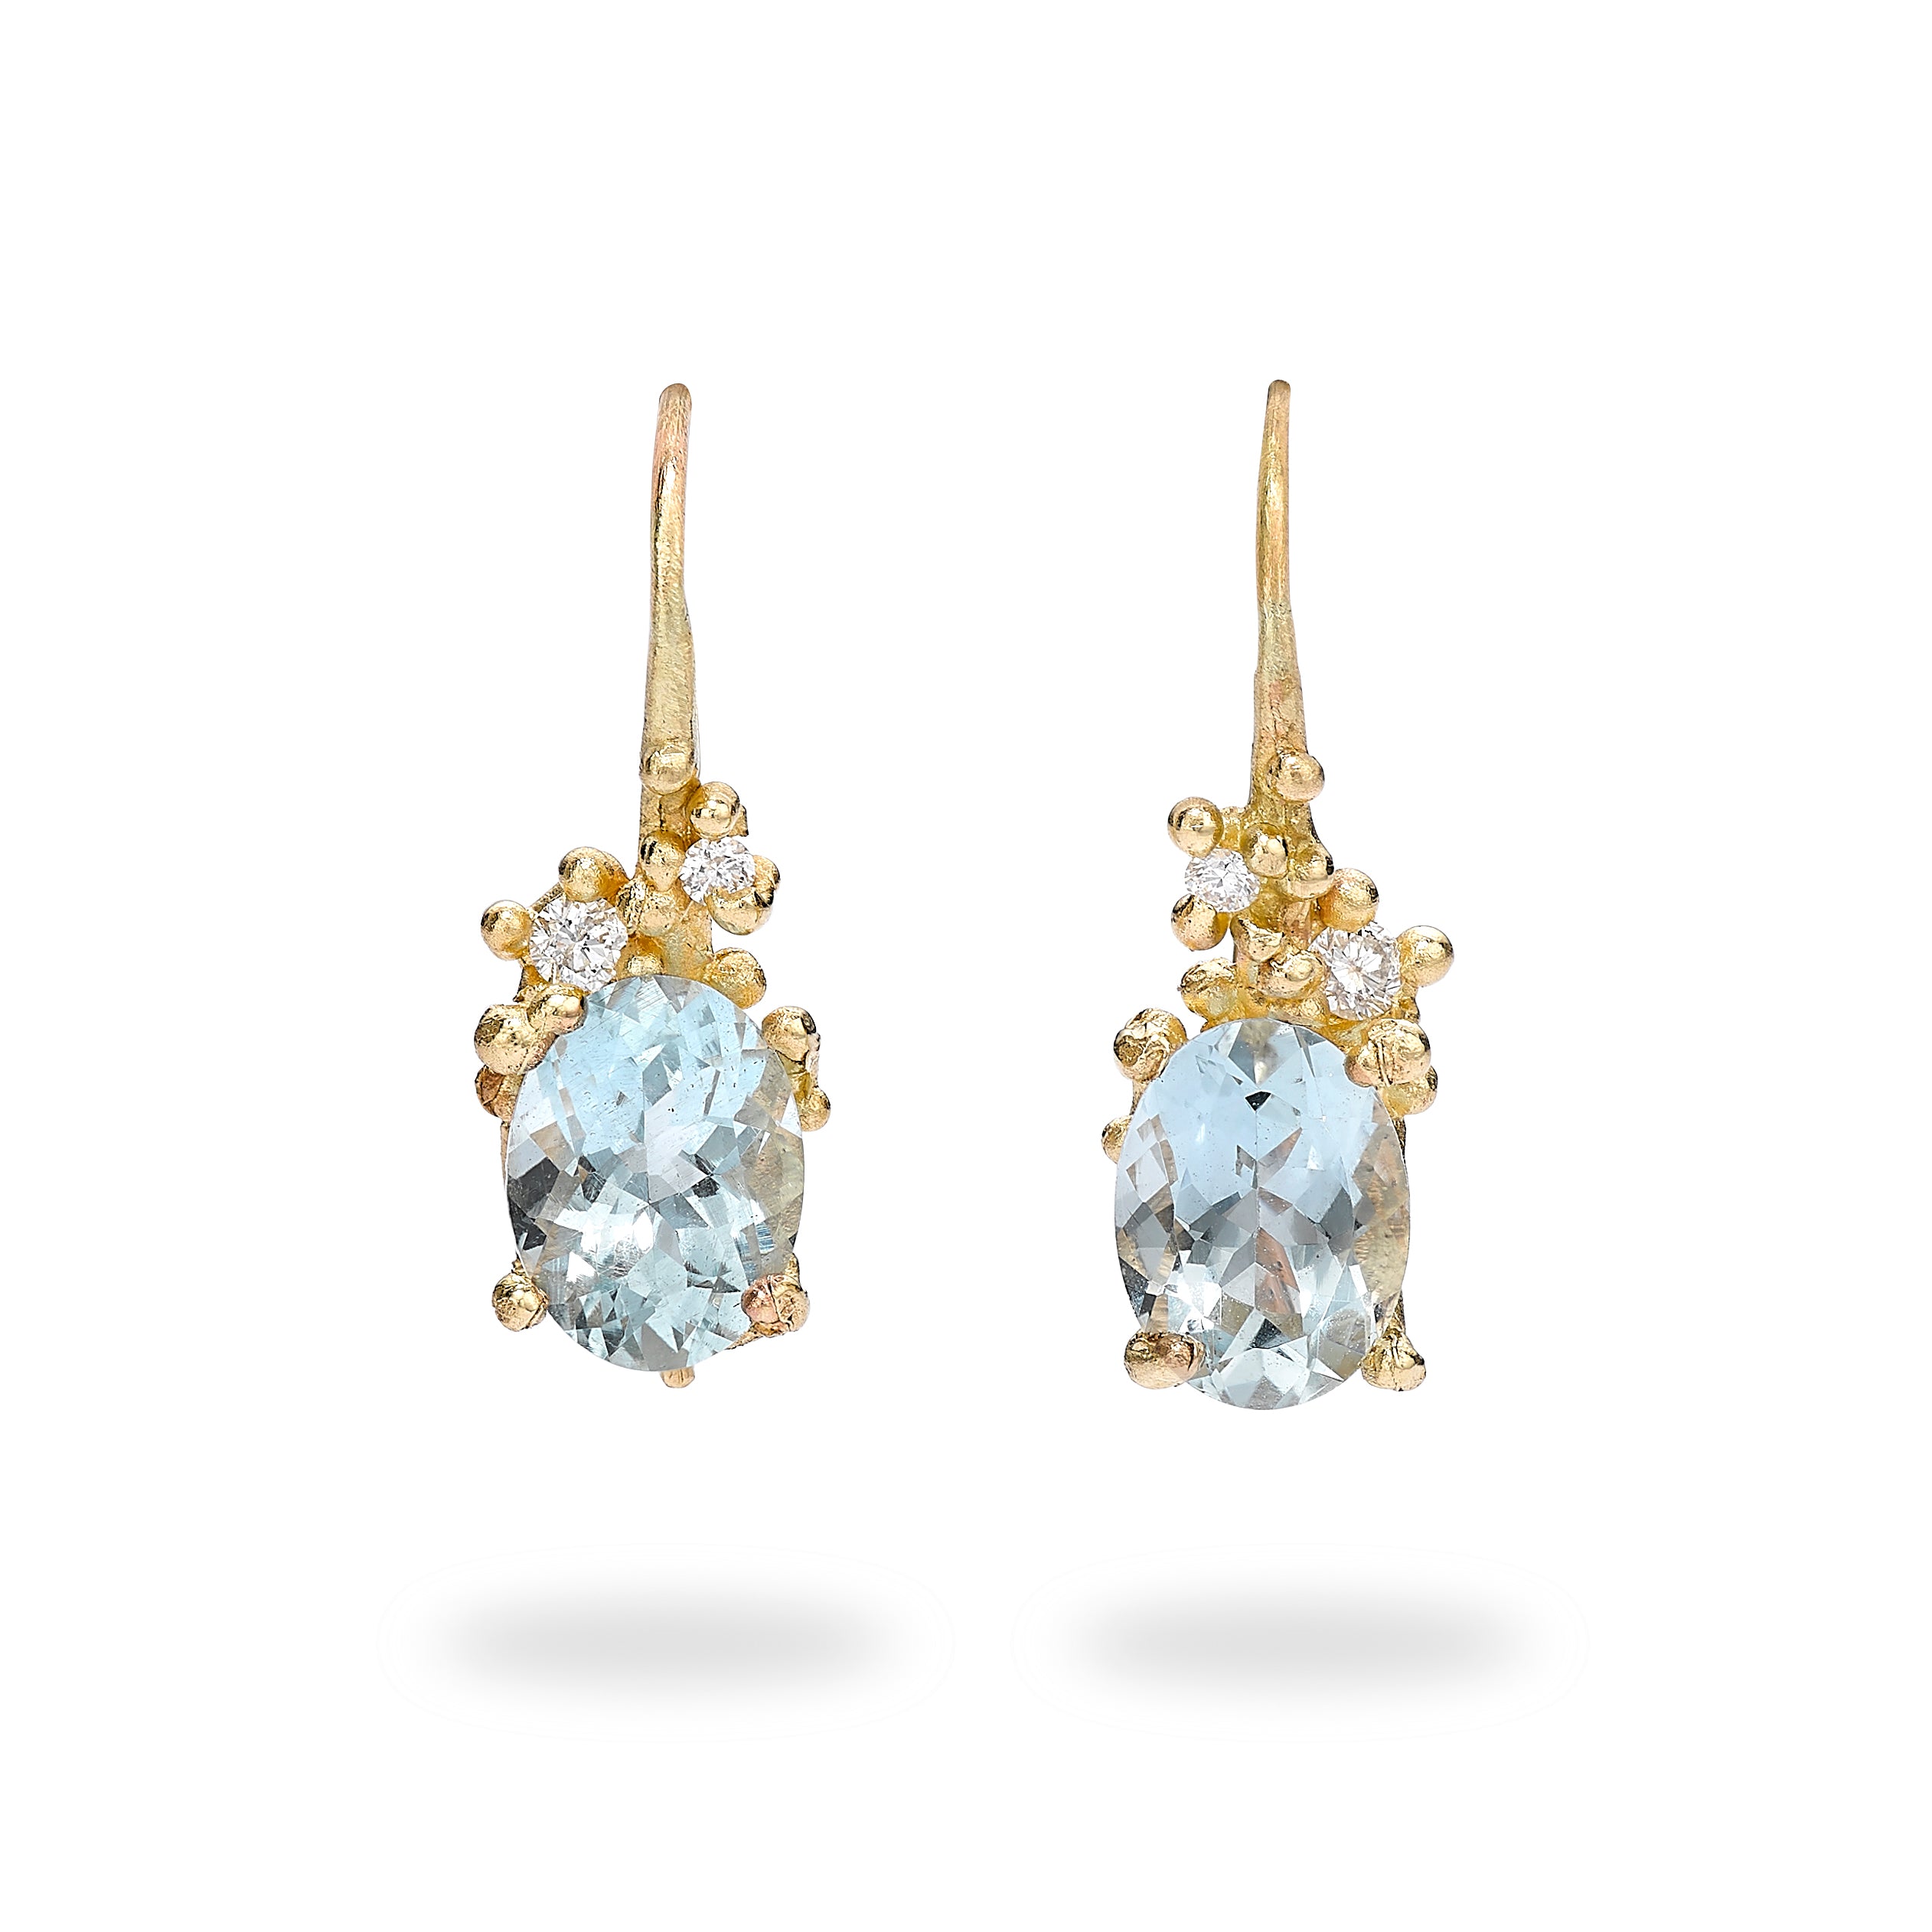 Oval Aquamarine and diamond drop earrings from Ruth Tomlinson, handmade in London